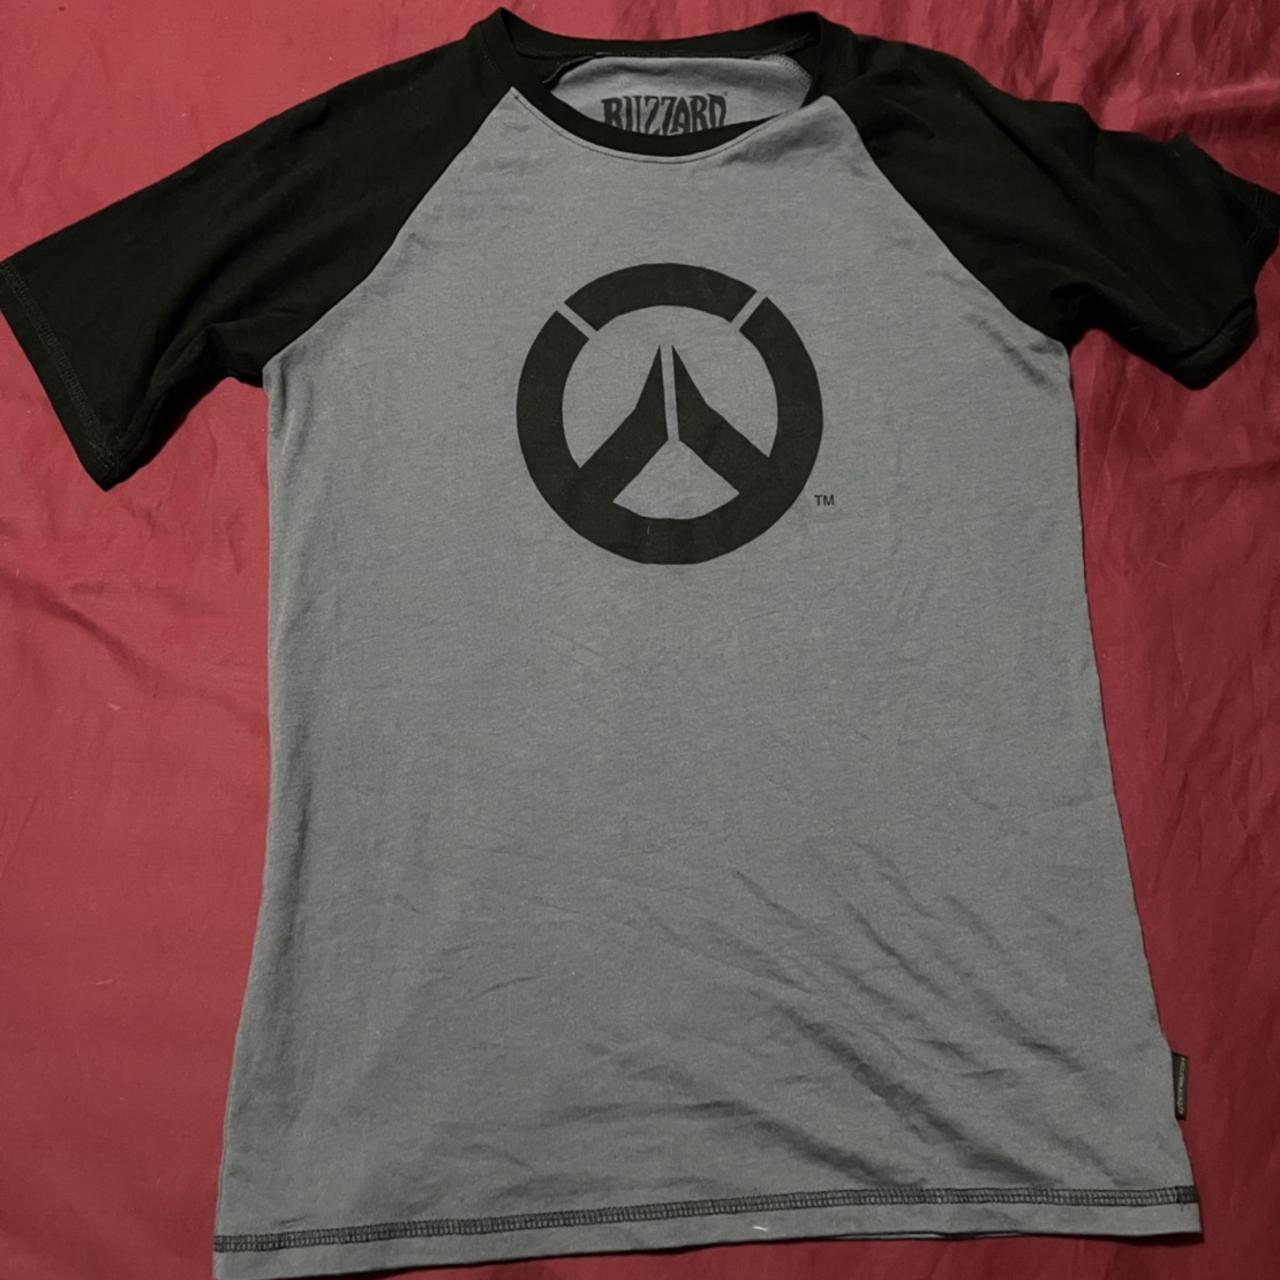 Overwatch Men's Black and Grey T-shirt (3)